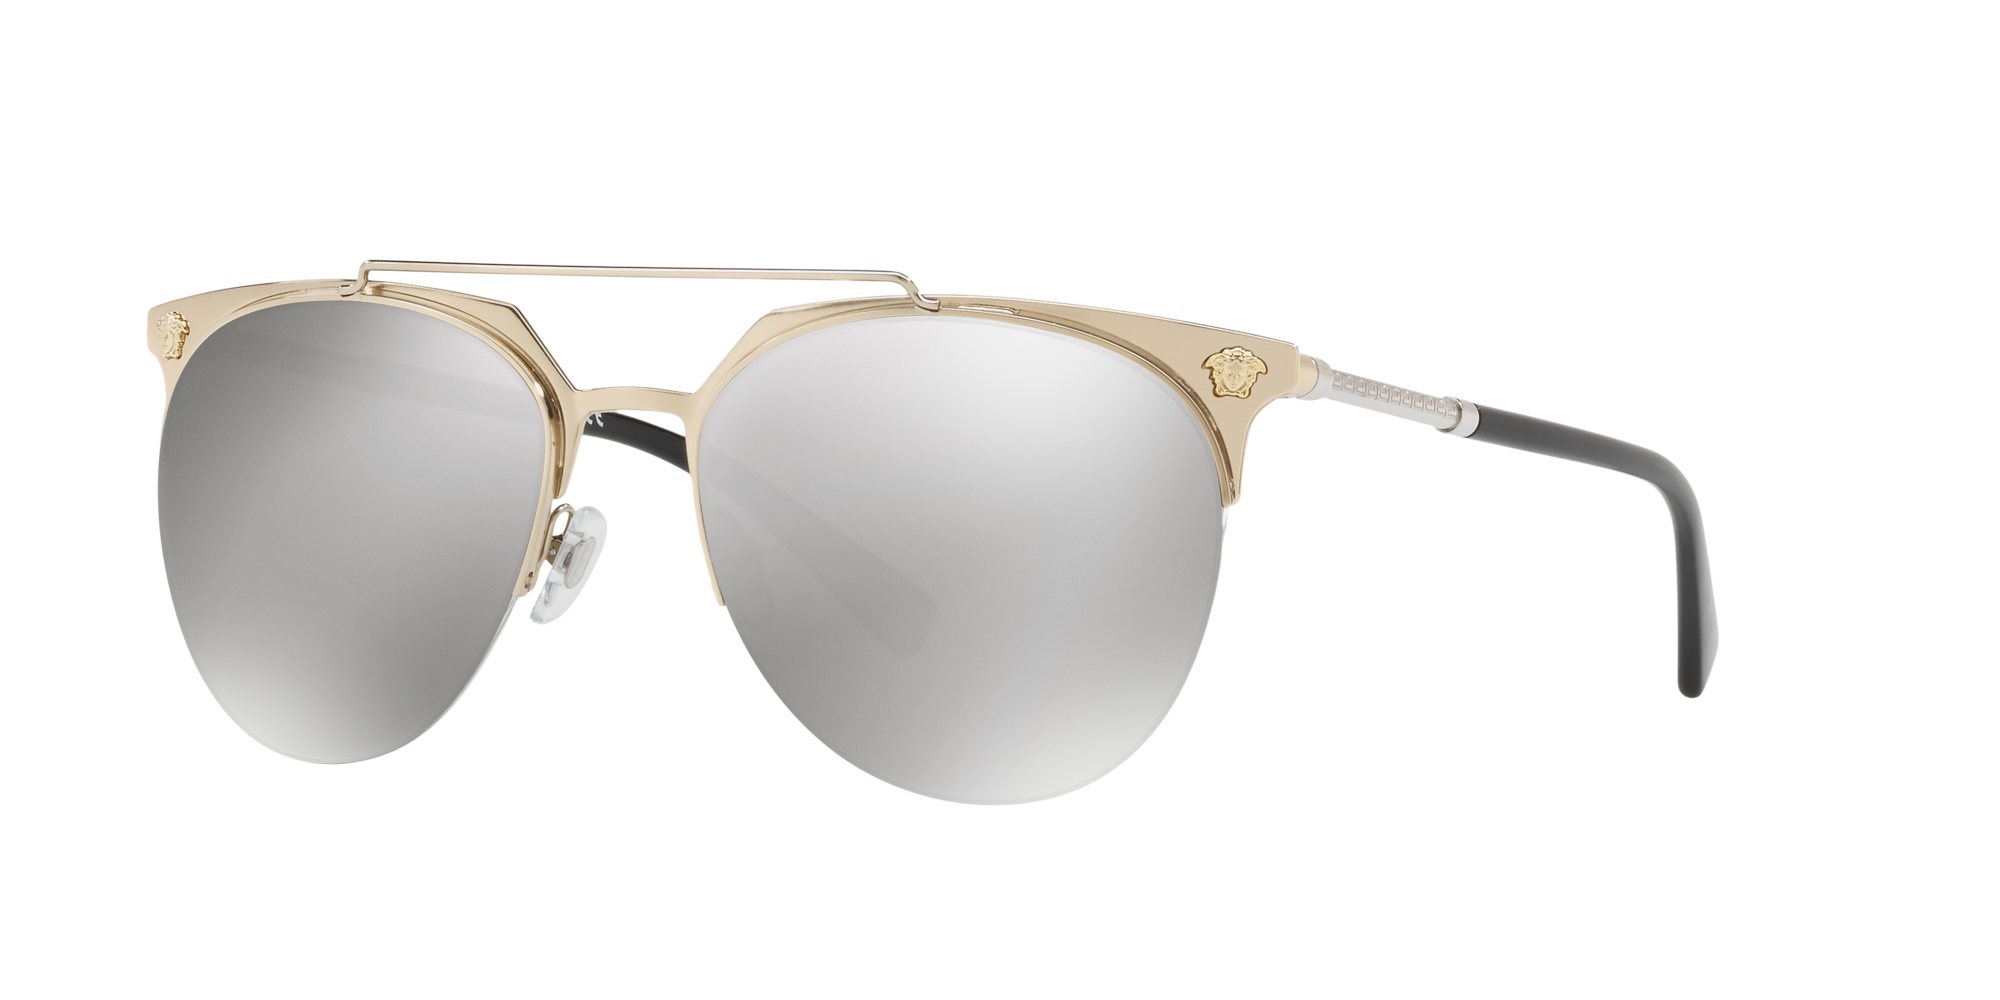 versace ve2181 sunglasses